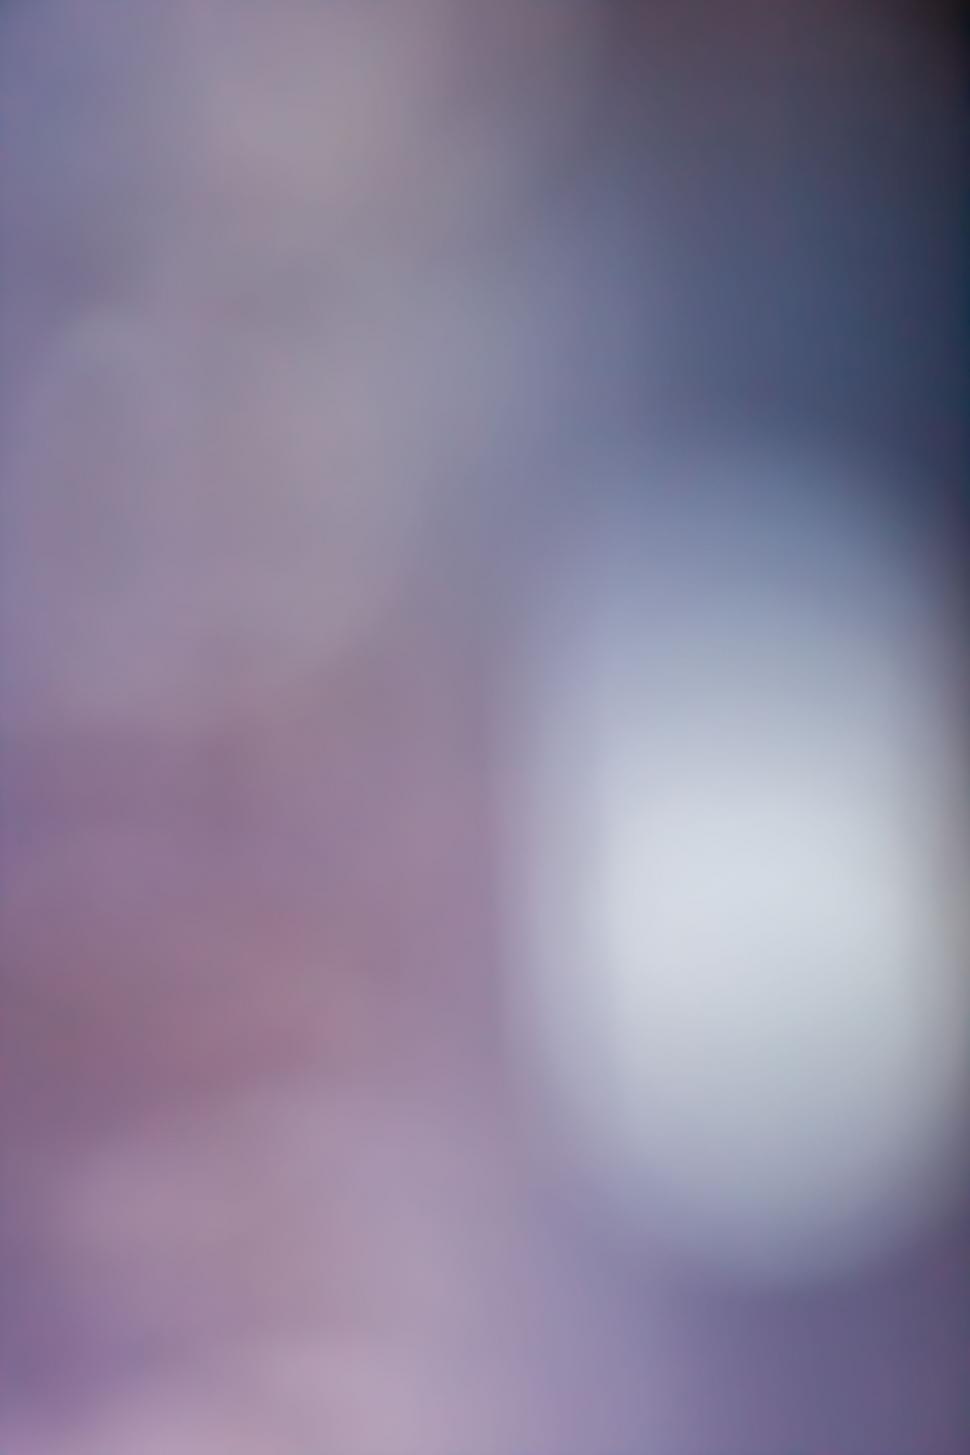 Free Image of Violet and indigo blurred light background 